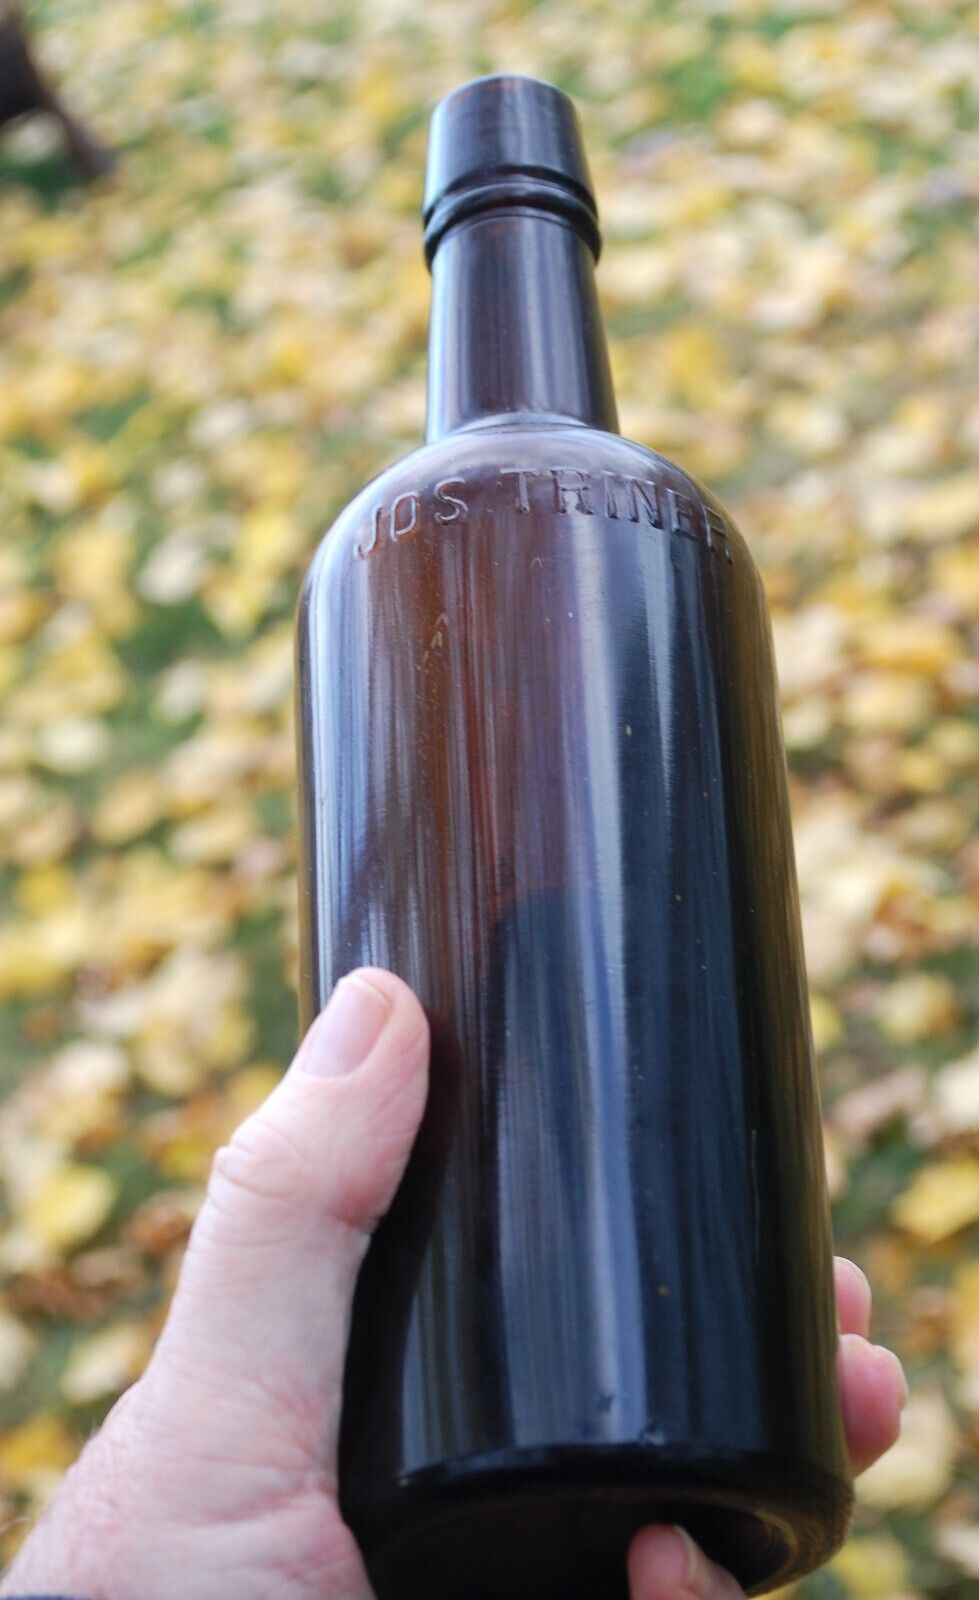 JOS TRINER dark brown CHICAGO bottle, early 1900s